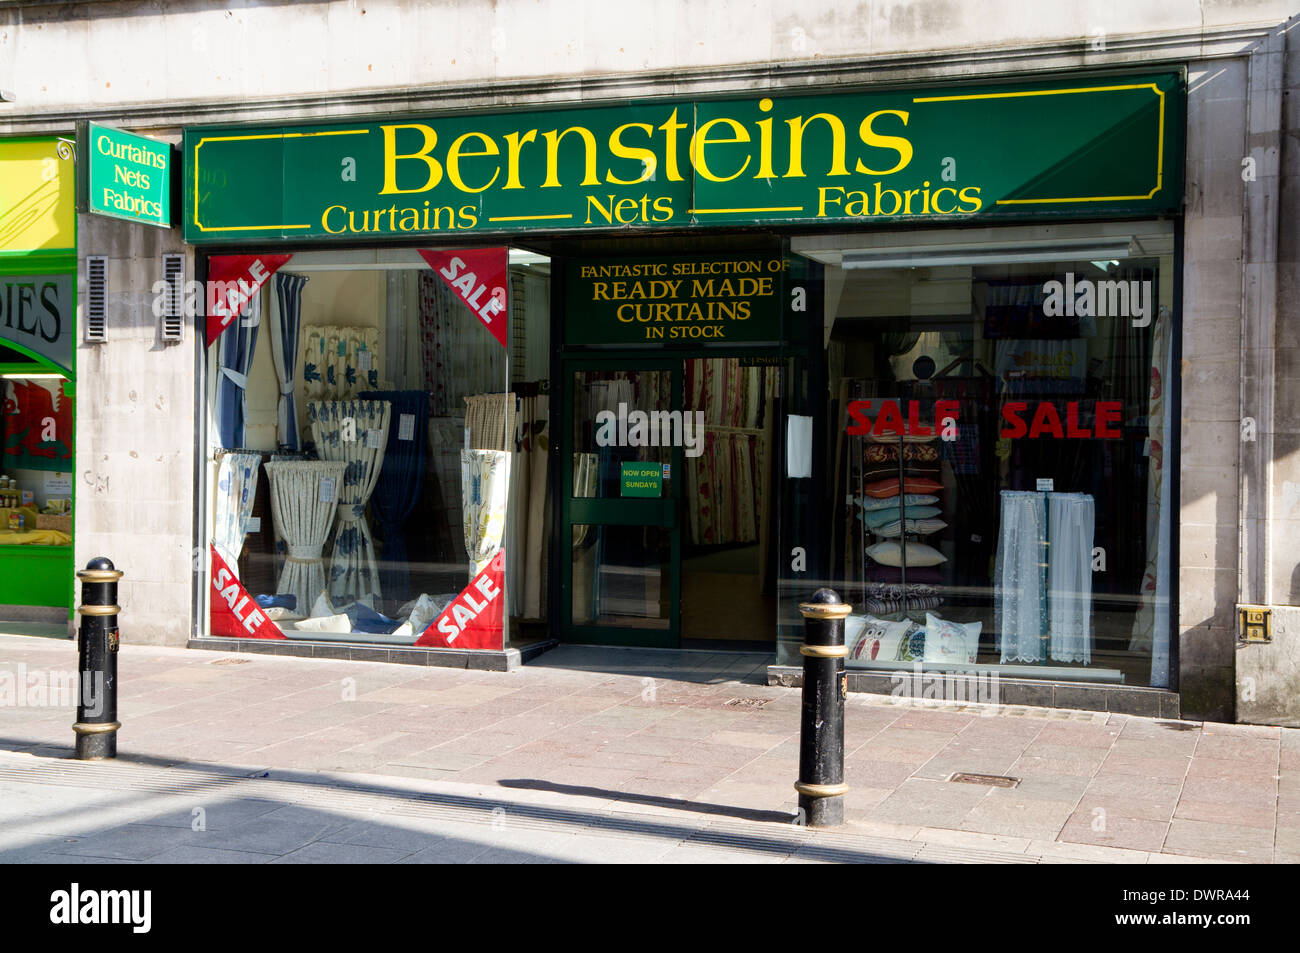 Bernsteins soft furnishings shop, Cardiff, Wales. Stock Photo